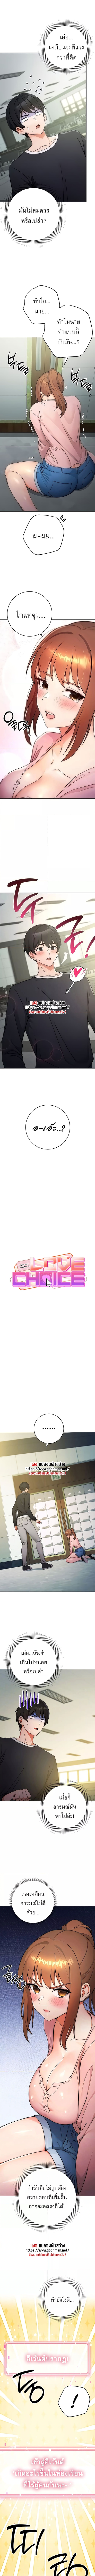 Love Choice 8 (1)